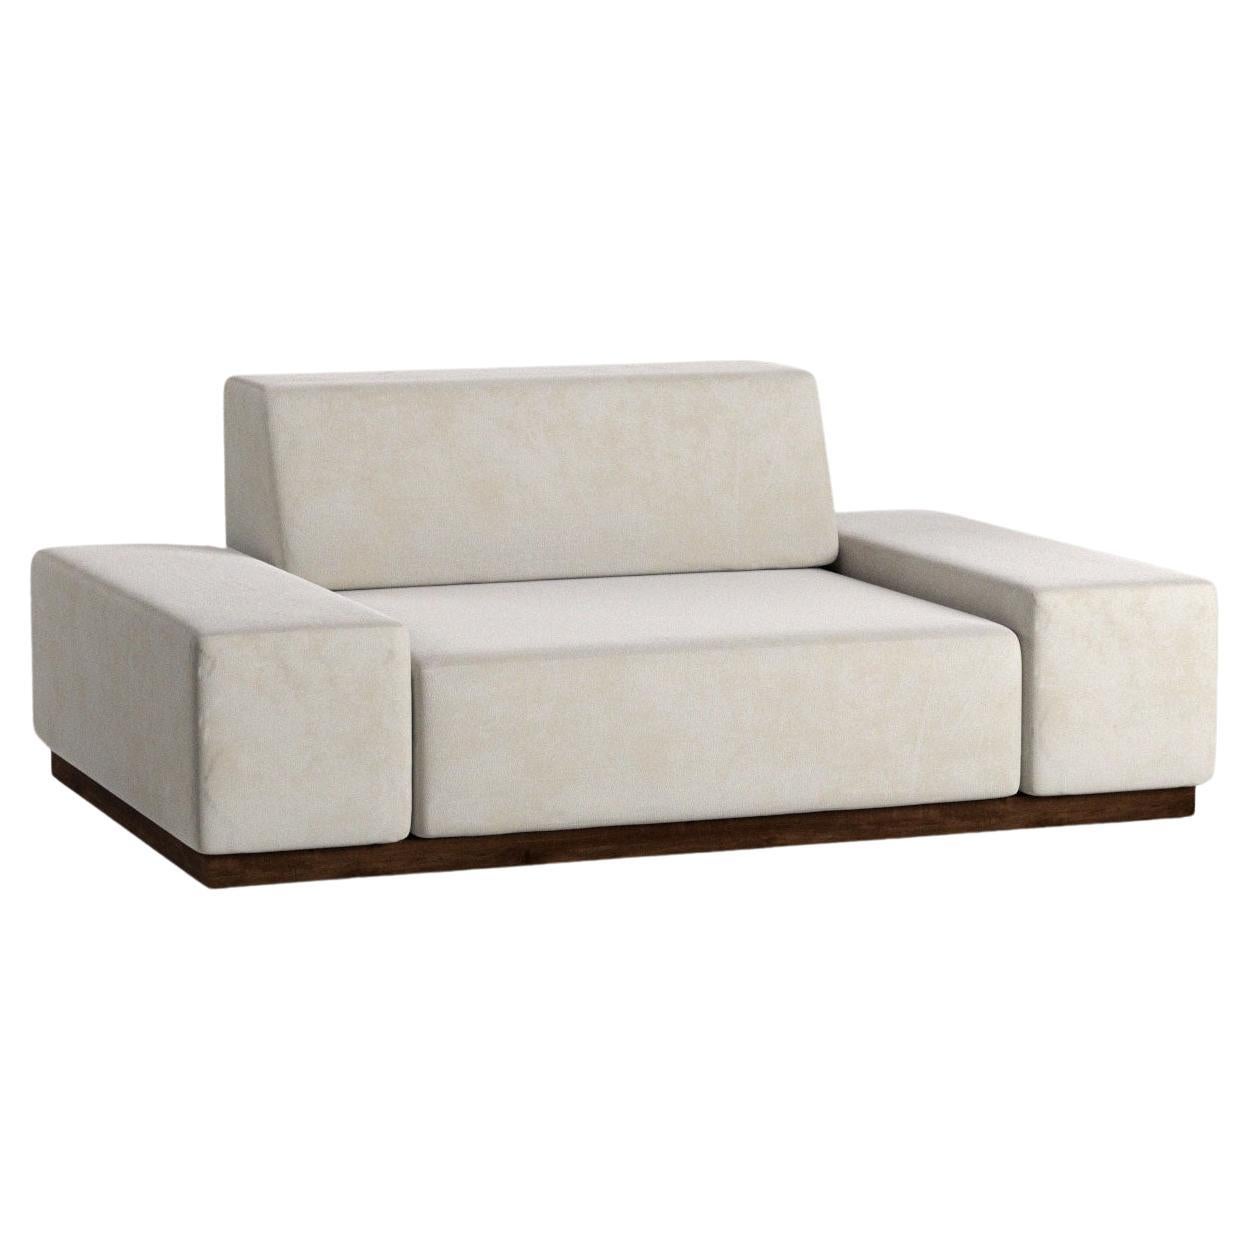 White One Seater Nube Sofa by Siete Studio